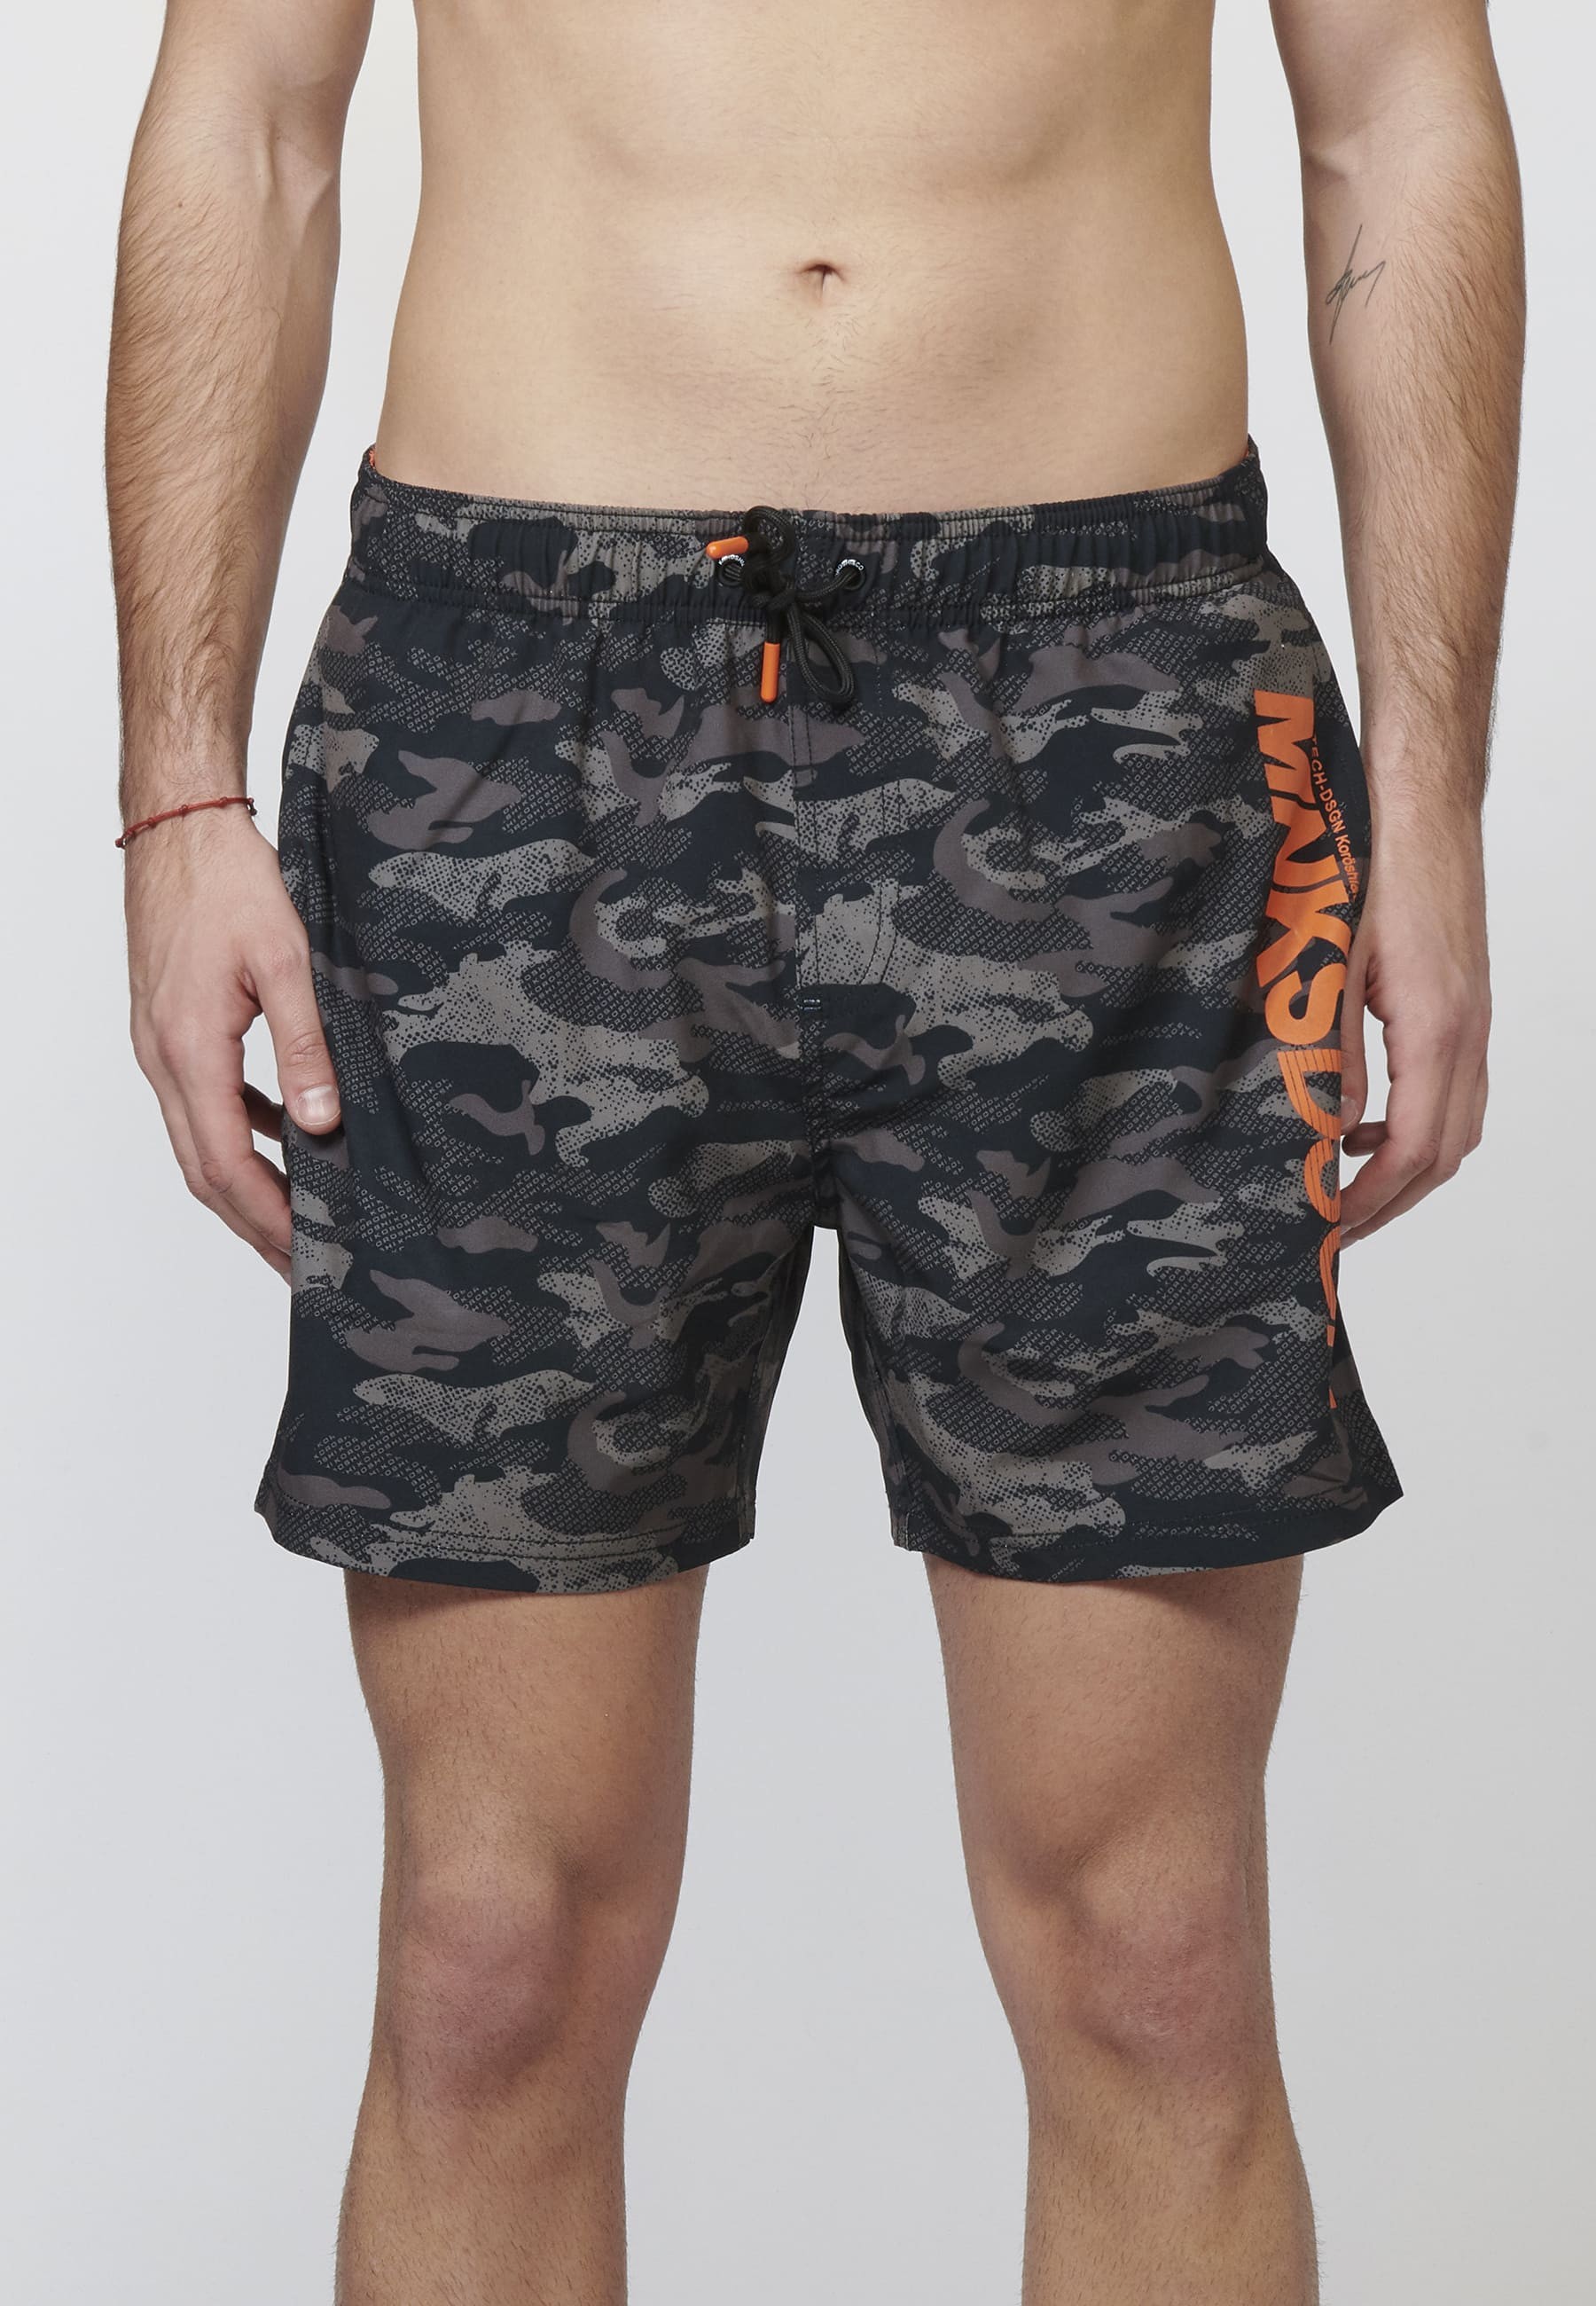 Camouflage print swimsuit